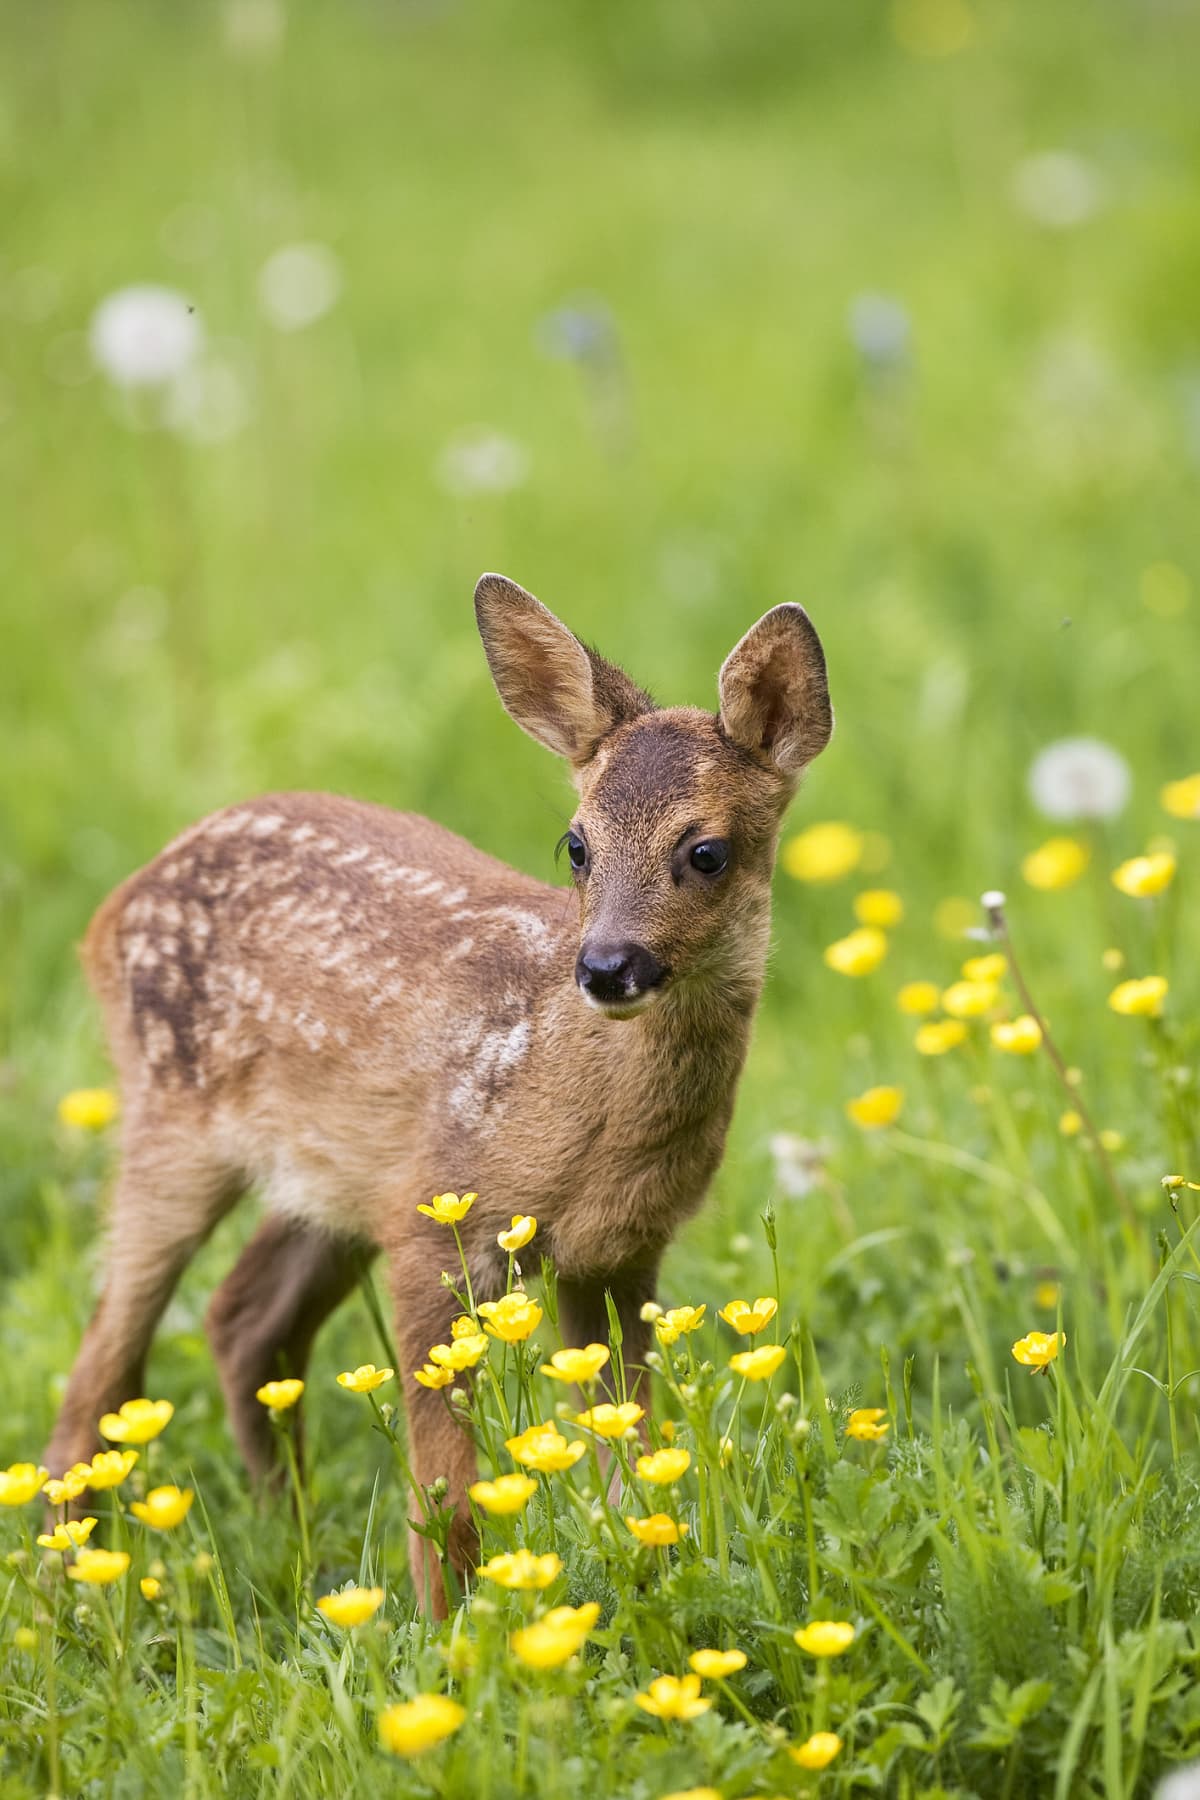 A young deer in the garden